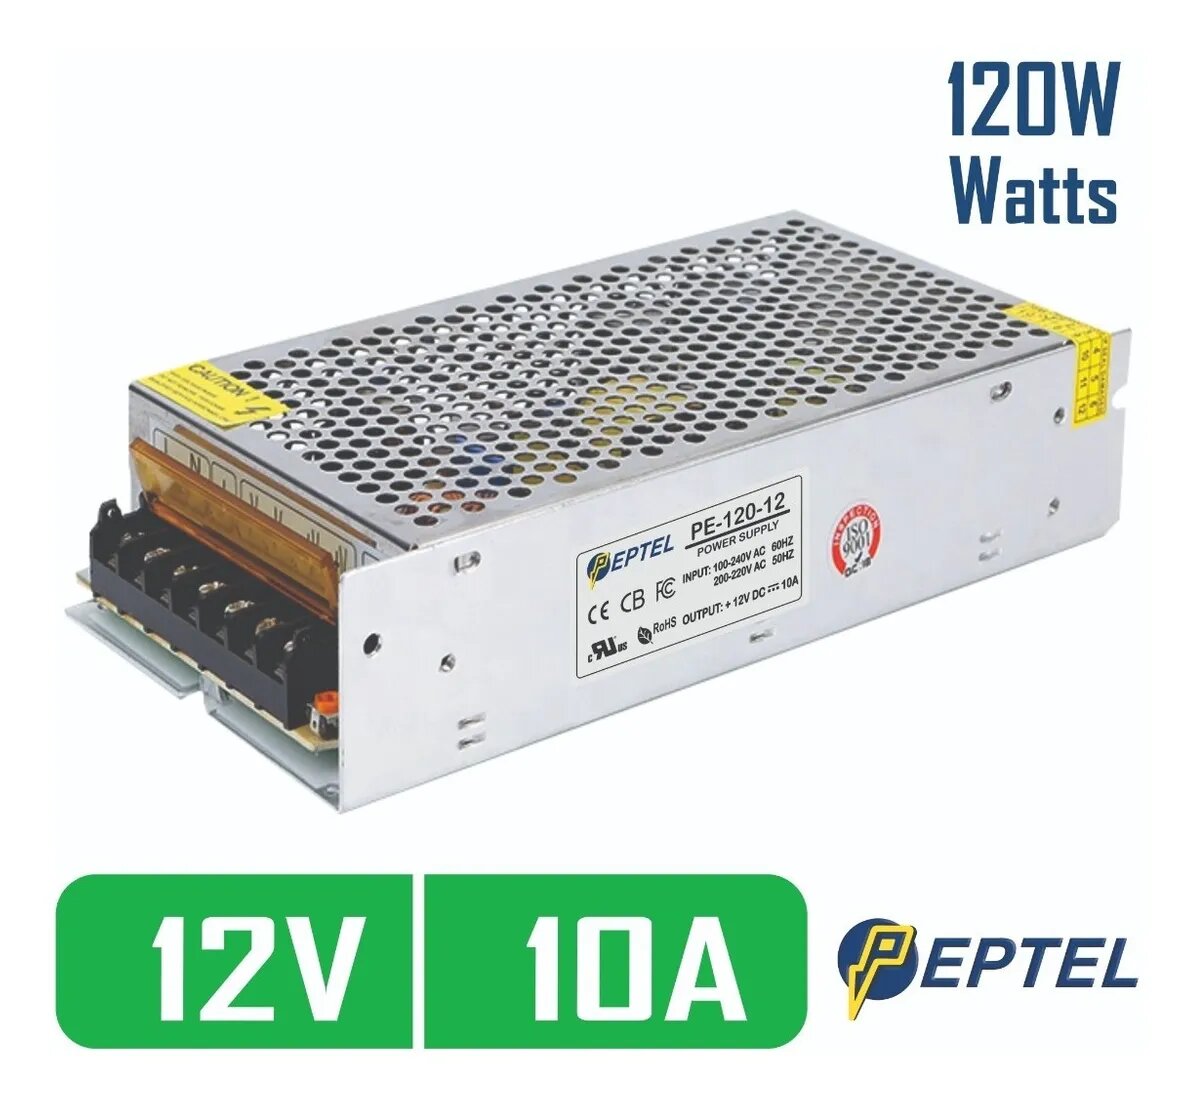 Fuente de poder switching 12V 10A 120W – Peptel